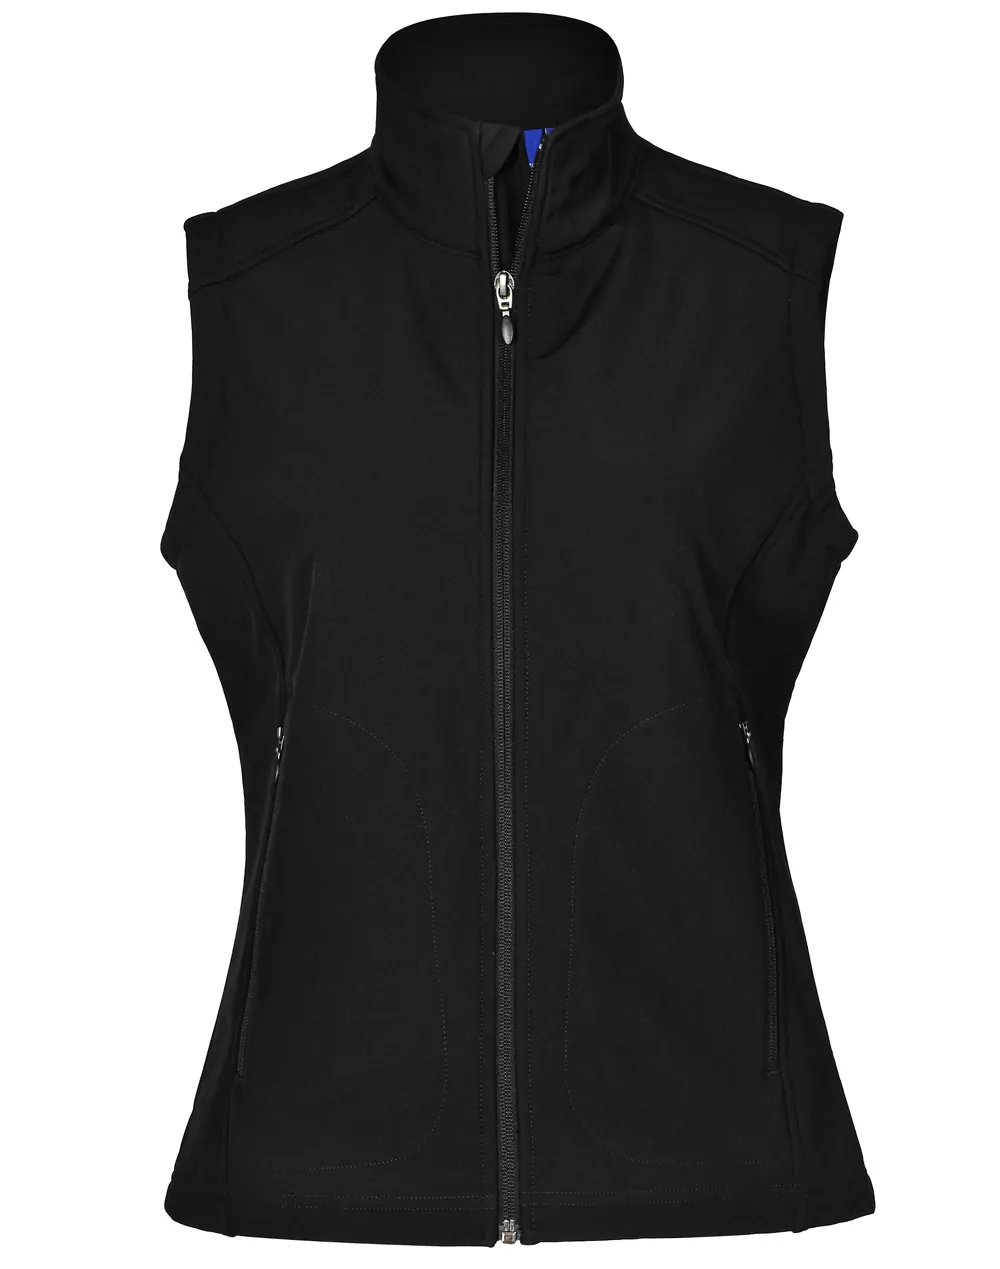 Ladies’ Softshell Hi-Tech Vest